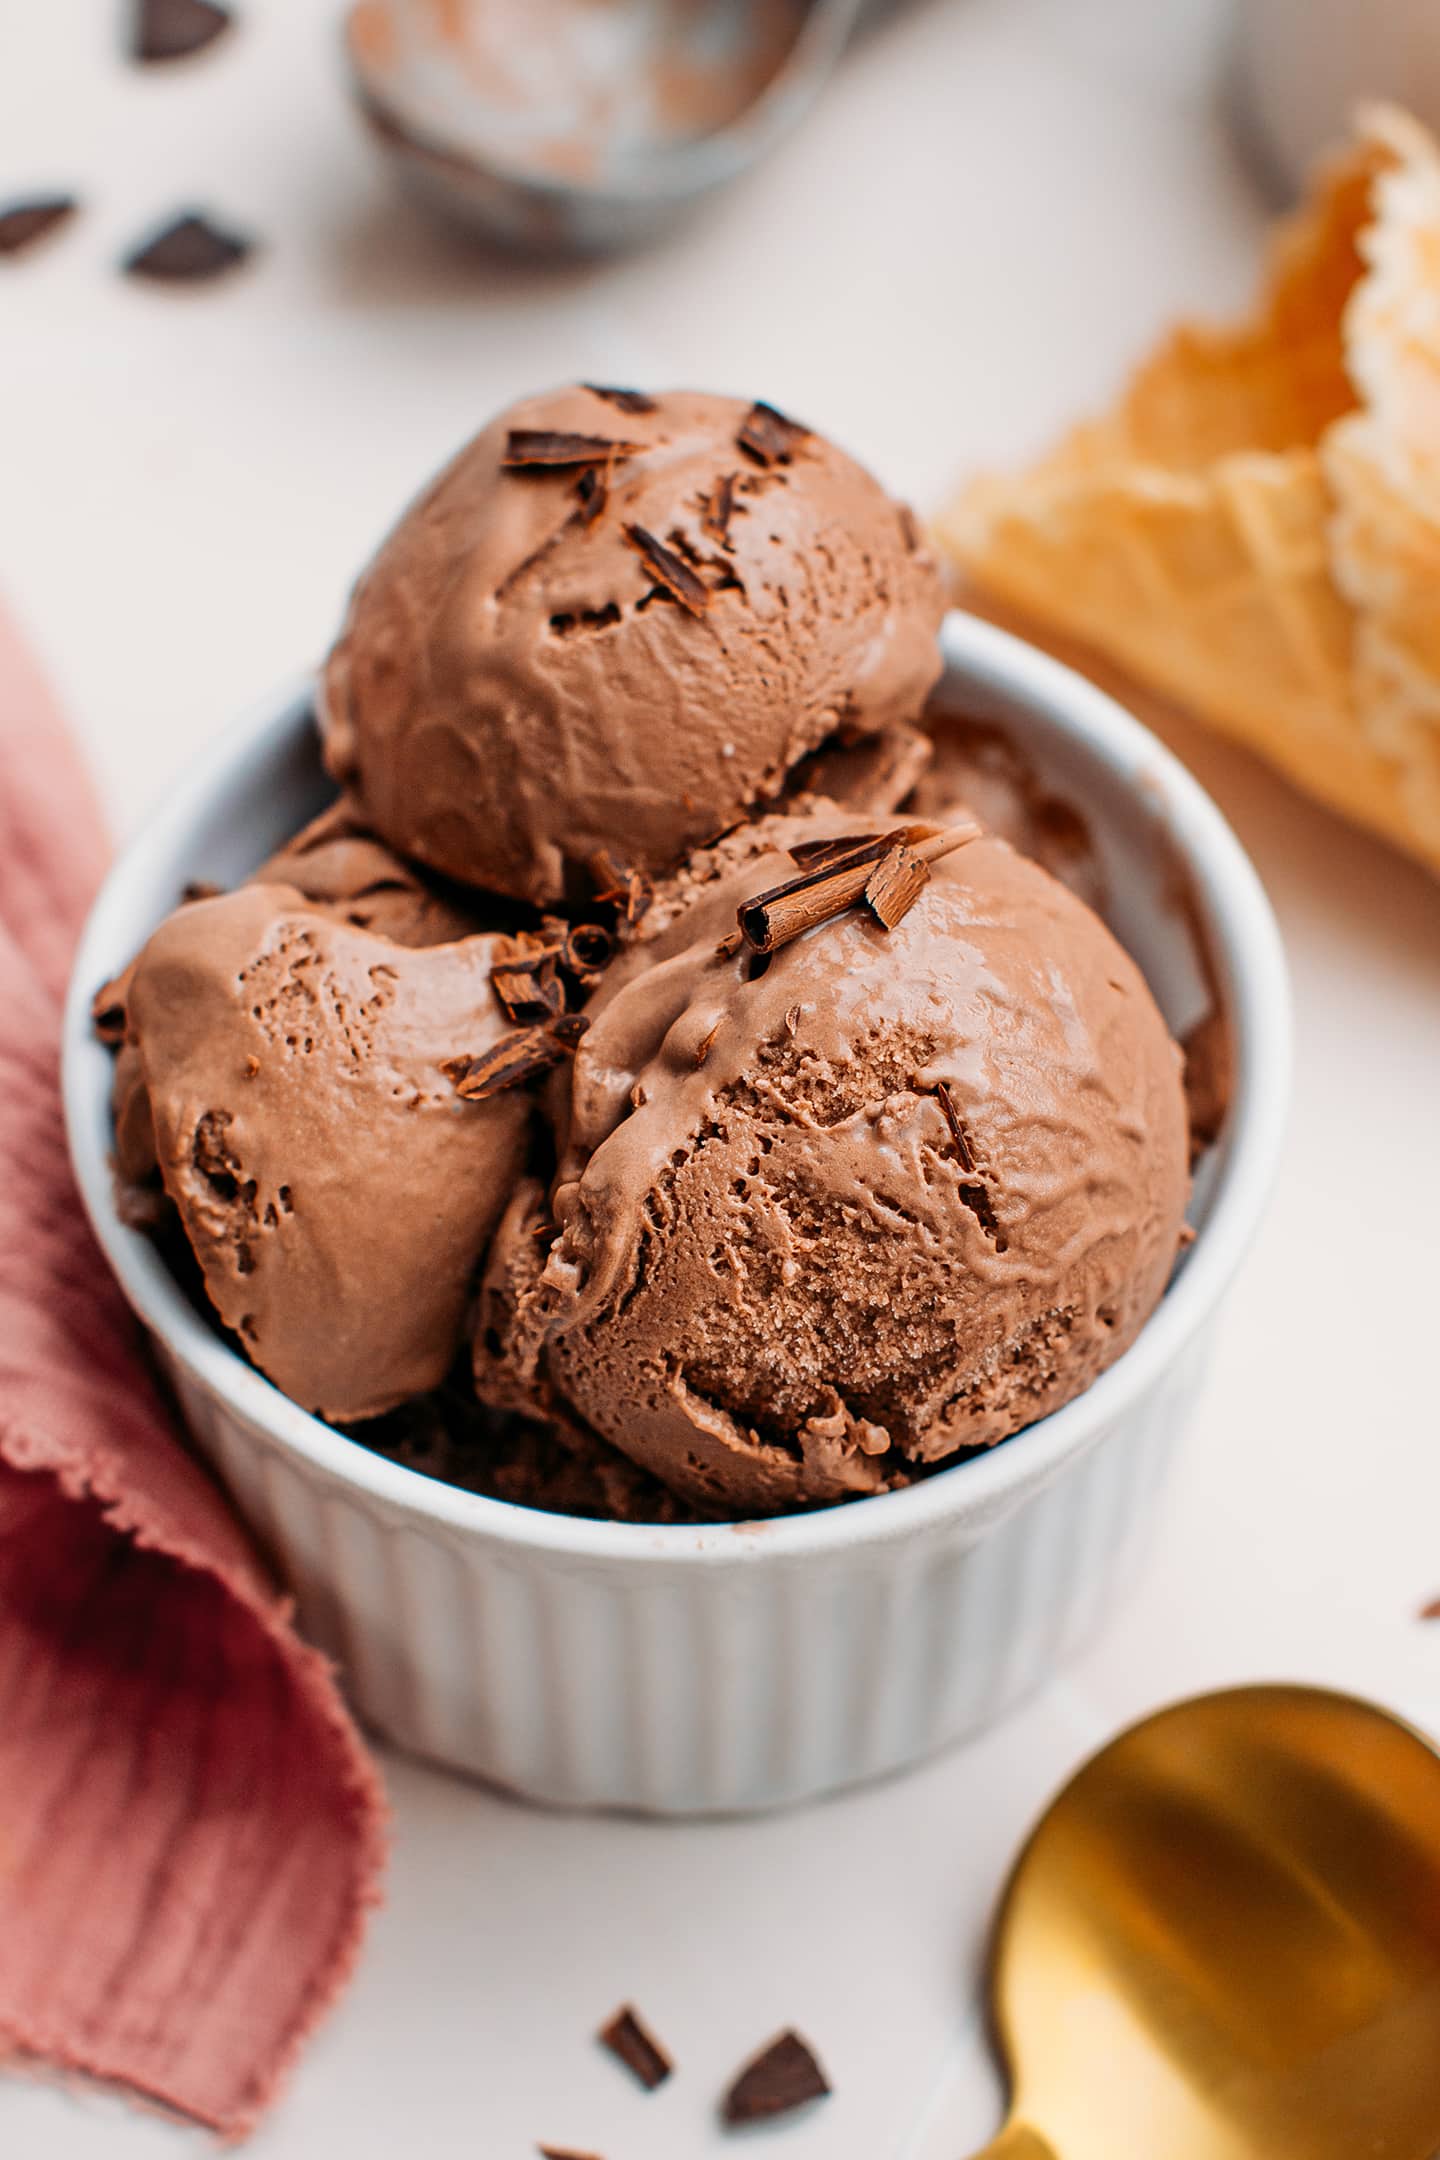 Scoops of vegan chocolate ice cream in a ramekin.